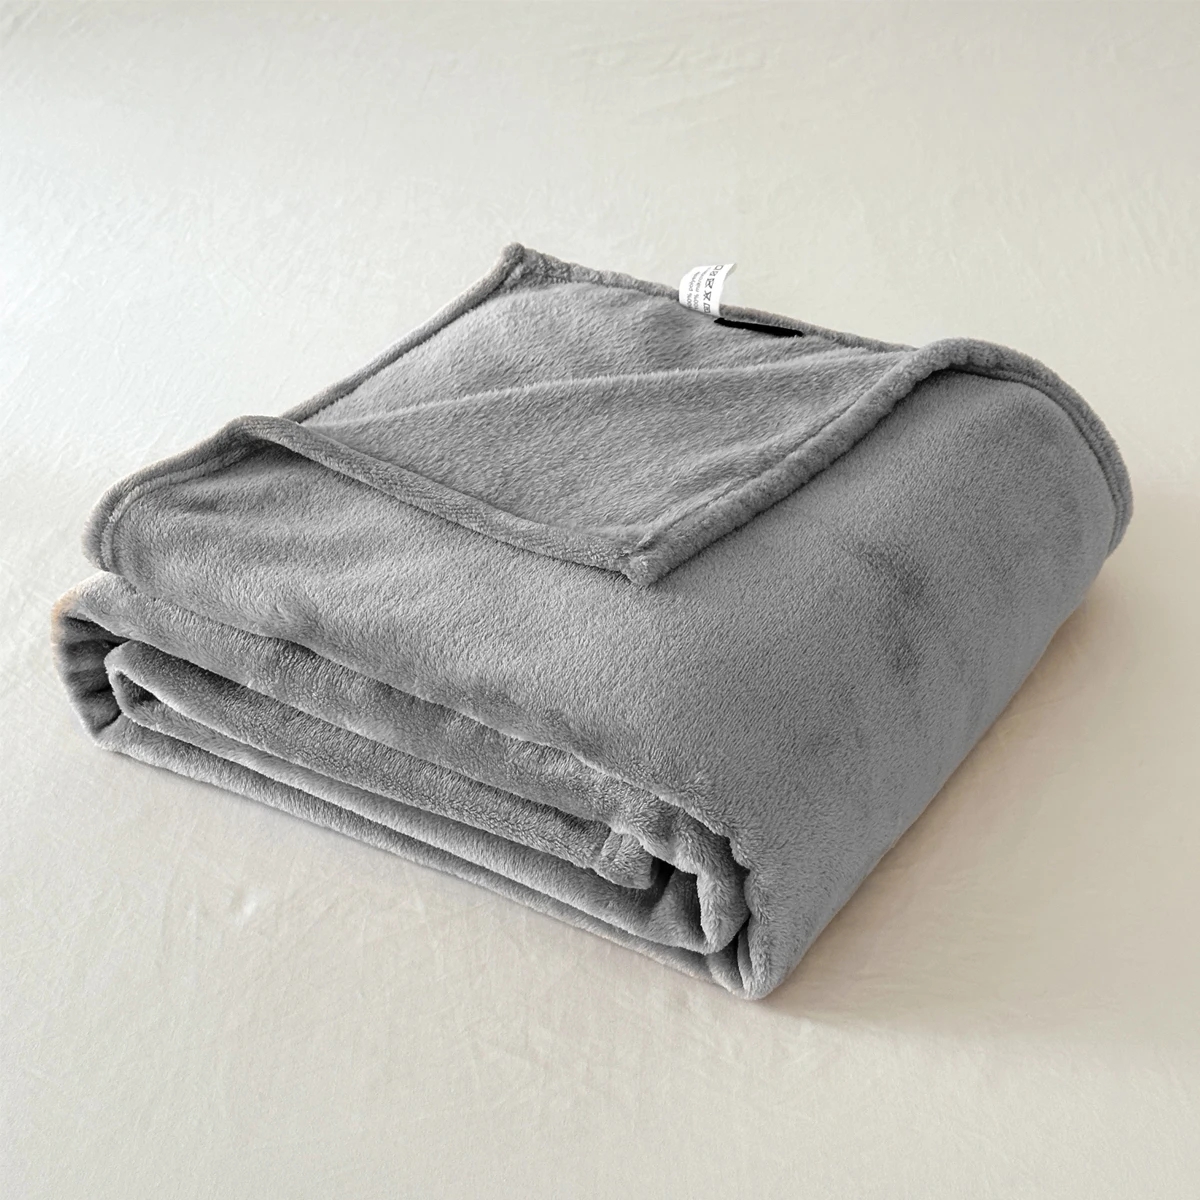 Bucephalus Grey throw Blanket Queen Size,High-Quality Machine Washable Spring & Summer Blanket Soft Flannel Bed Blanket